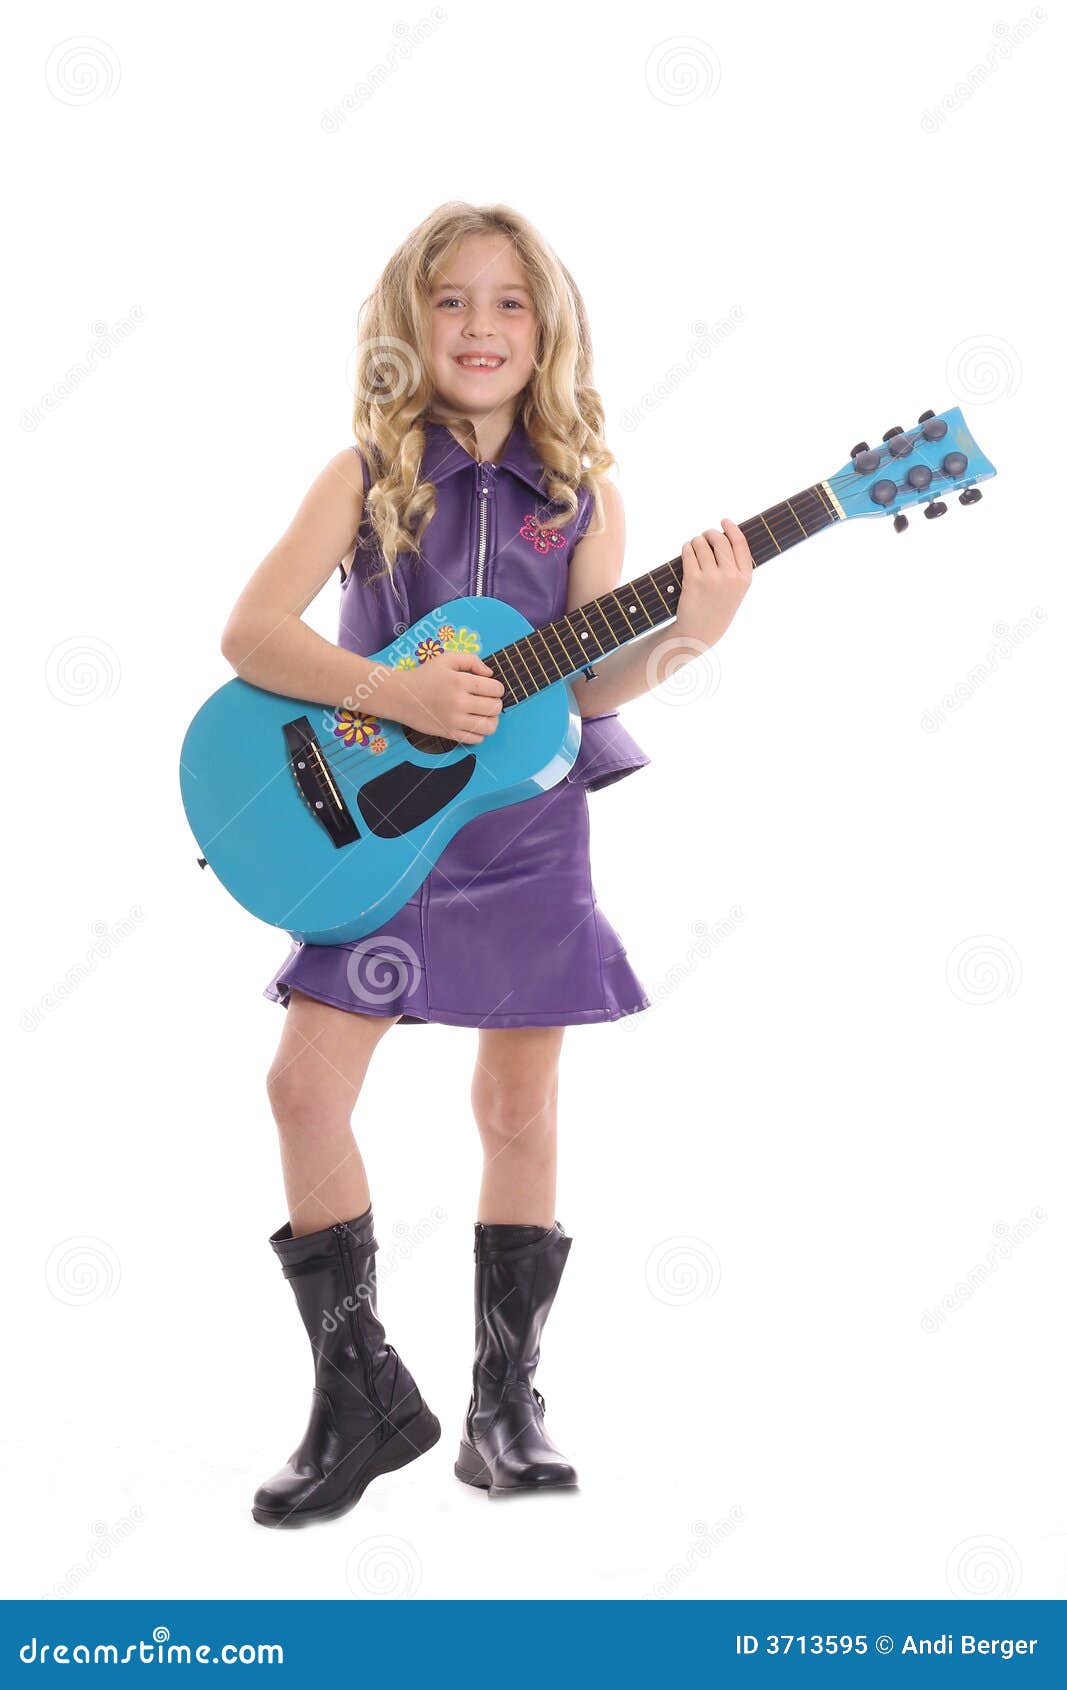 rockstar child playing guitar